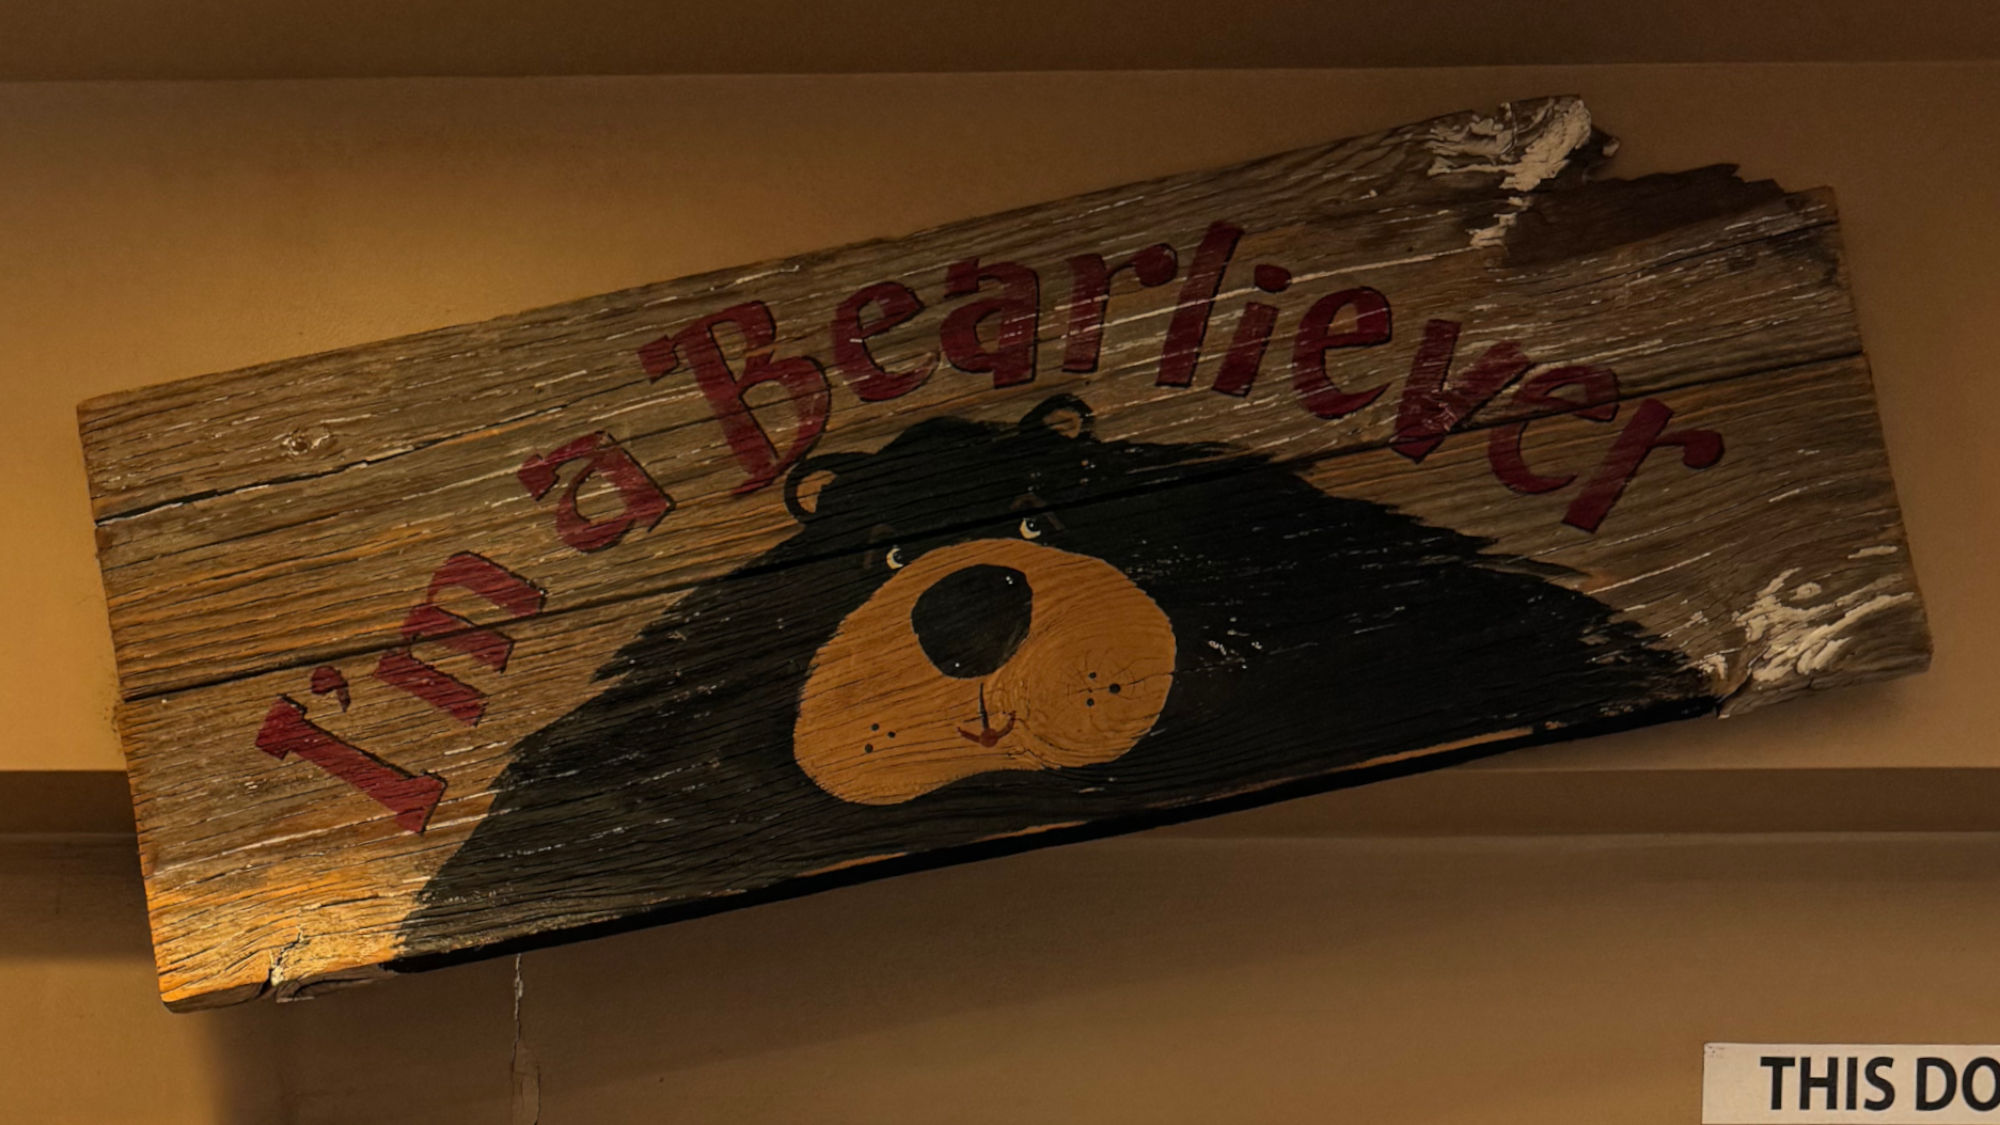 Black Bear Diner I'm a Bearliever